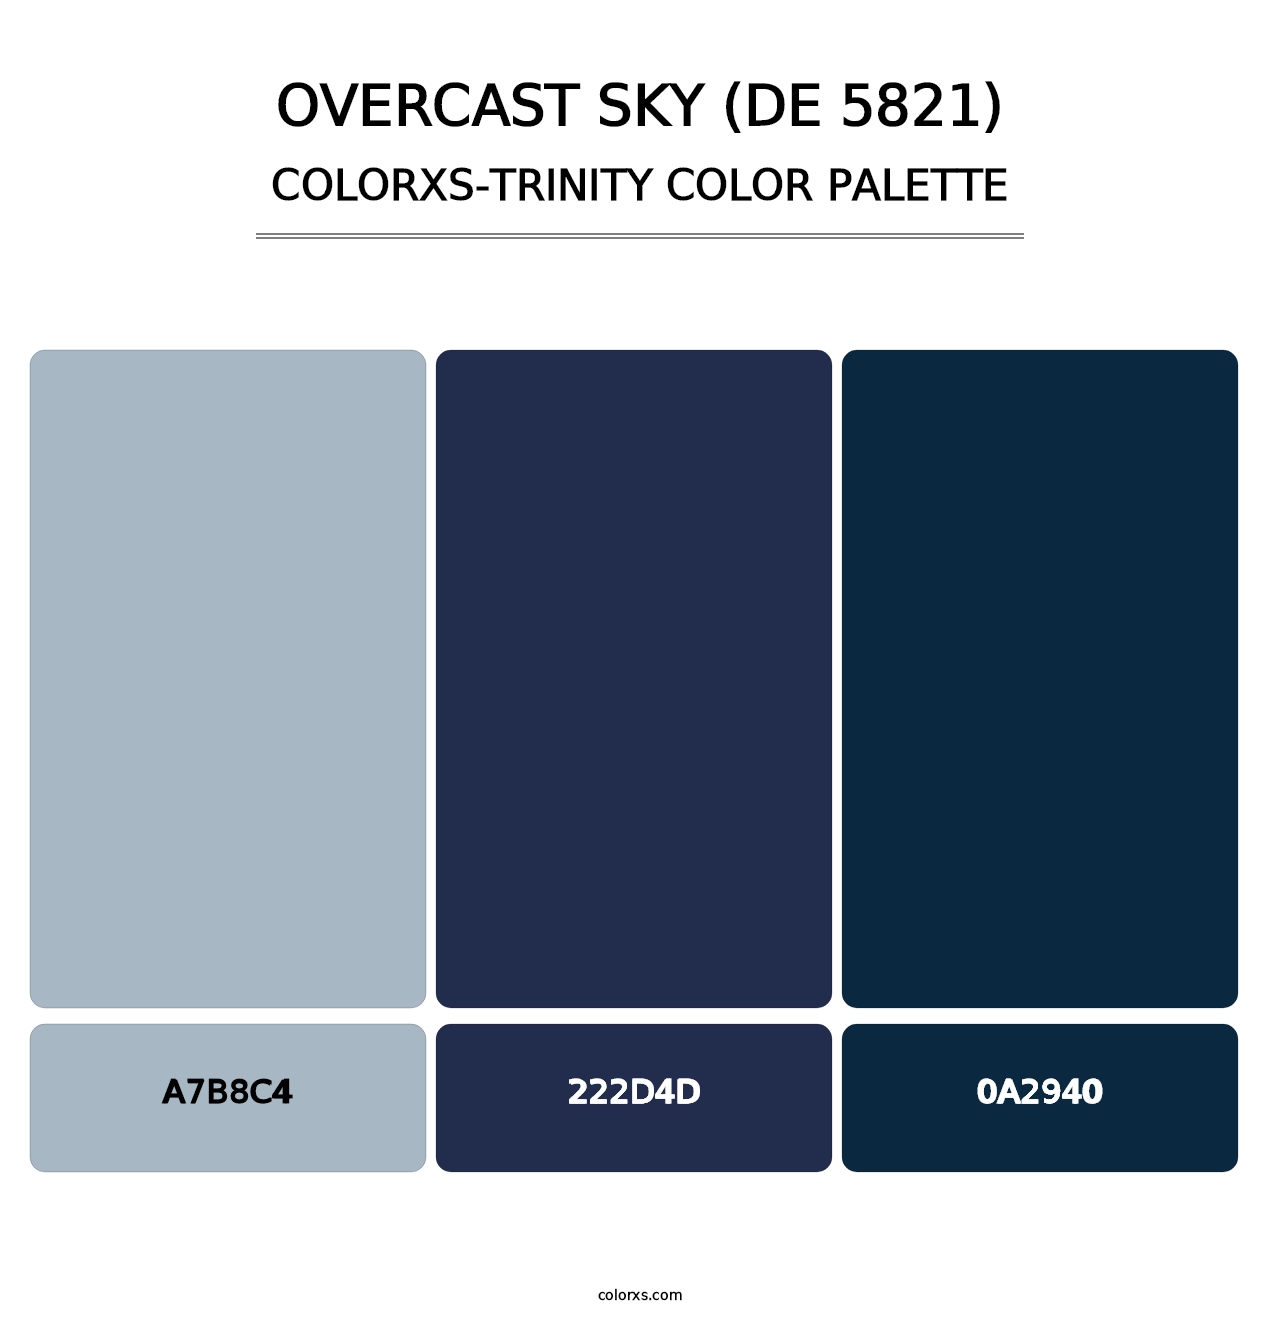 Overcast Sky (DE 5821) - Colorxs Trinity Palette